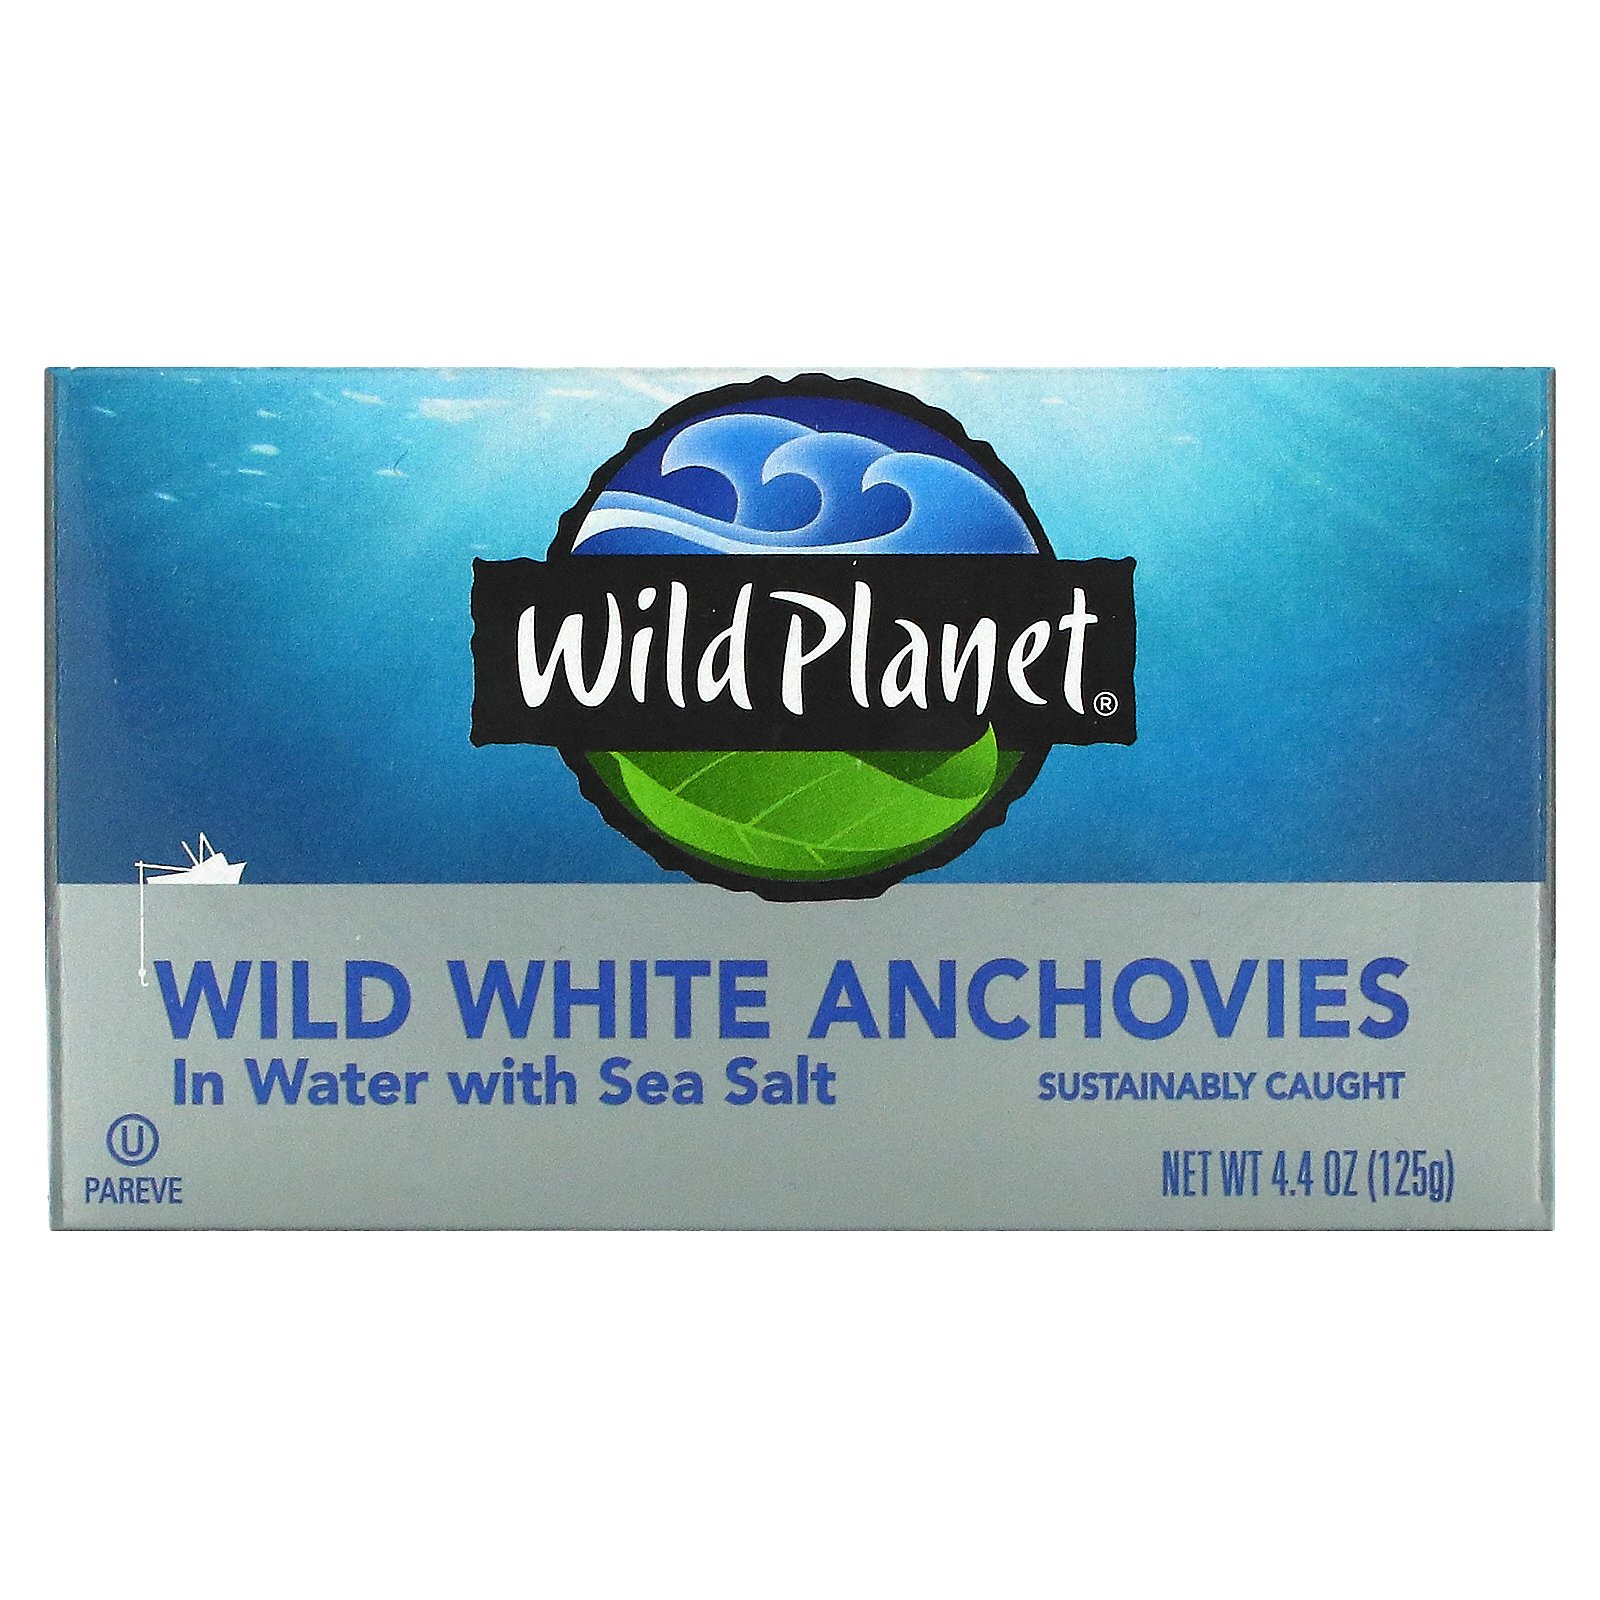 Wild Planet ホワイト アンチョビ 缶詰 【 iHerb アイハーブ 公式 】 ワイルドプラネット 天然 カタクチイワシ 海塩 水煮シ 125g